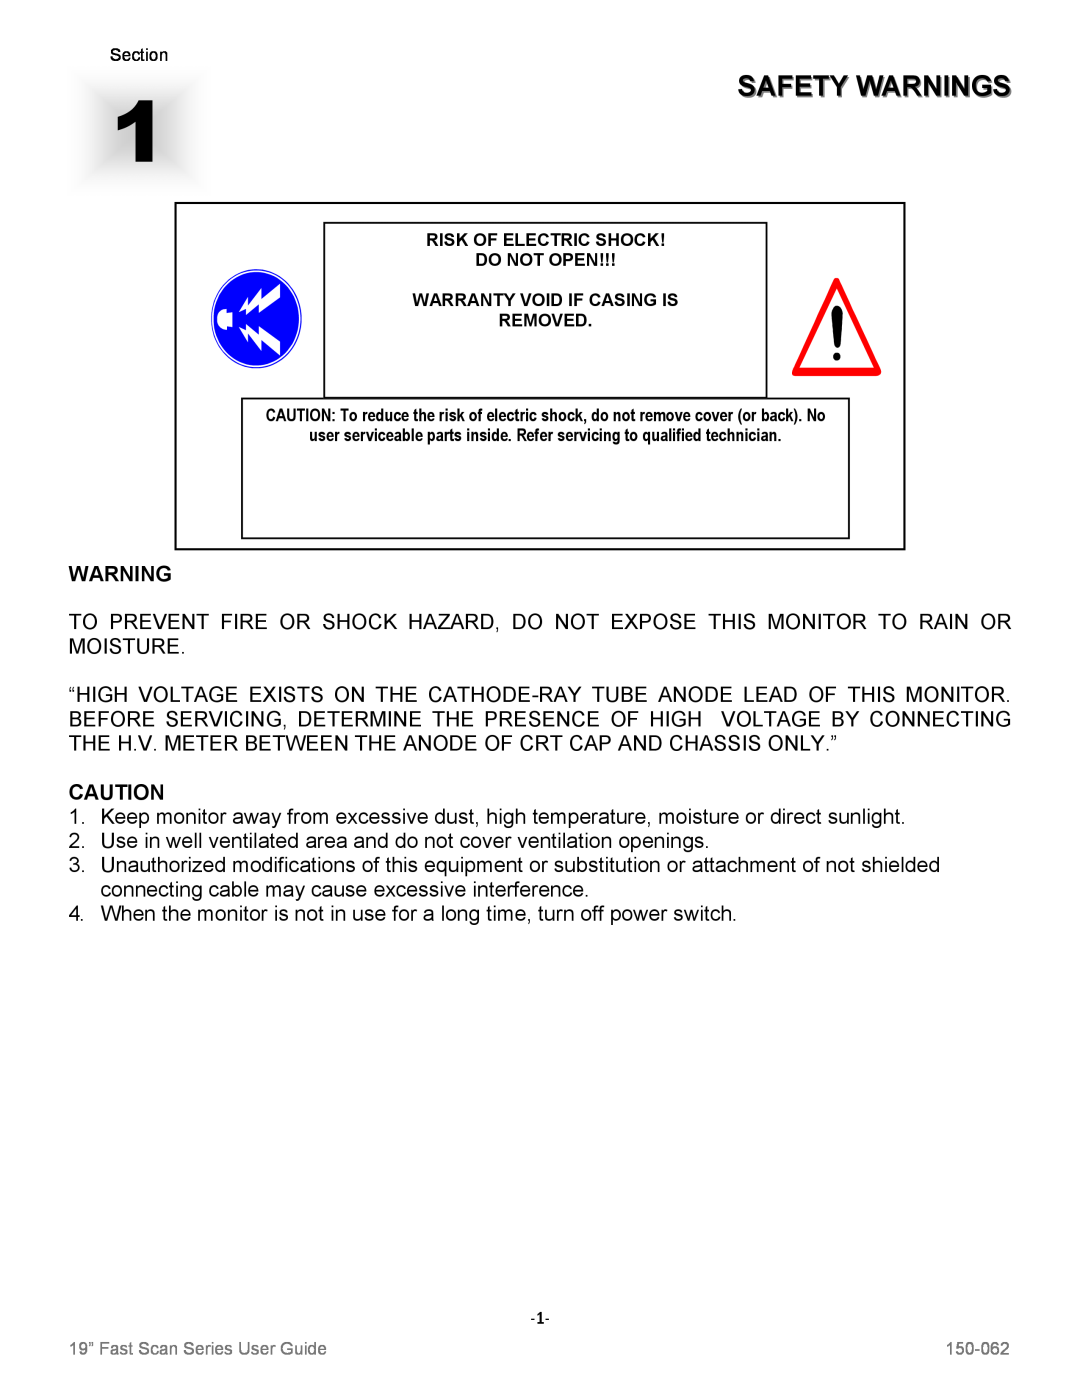 Sharp VT19B-PW manual Safety Warnings 